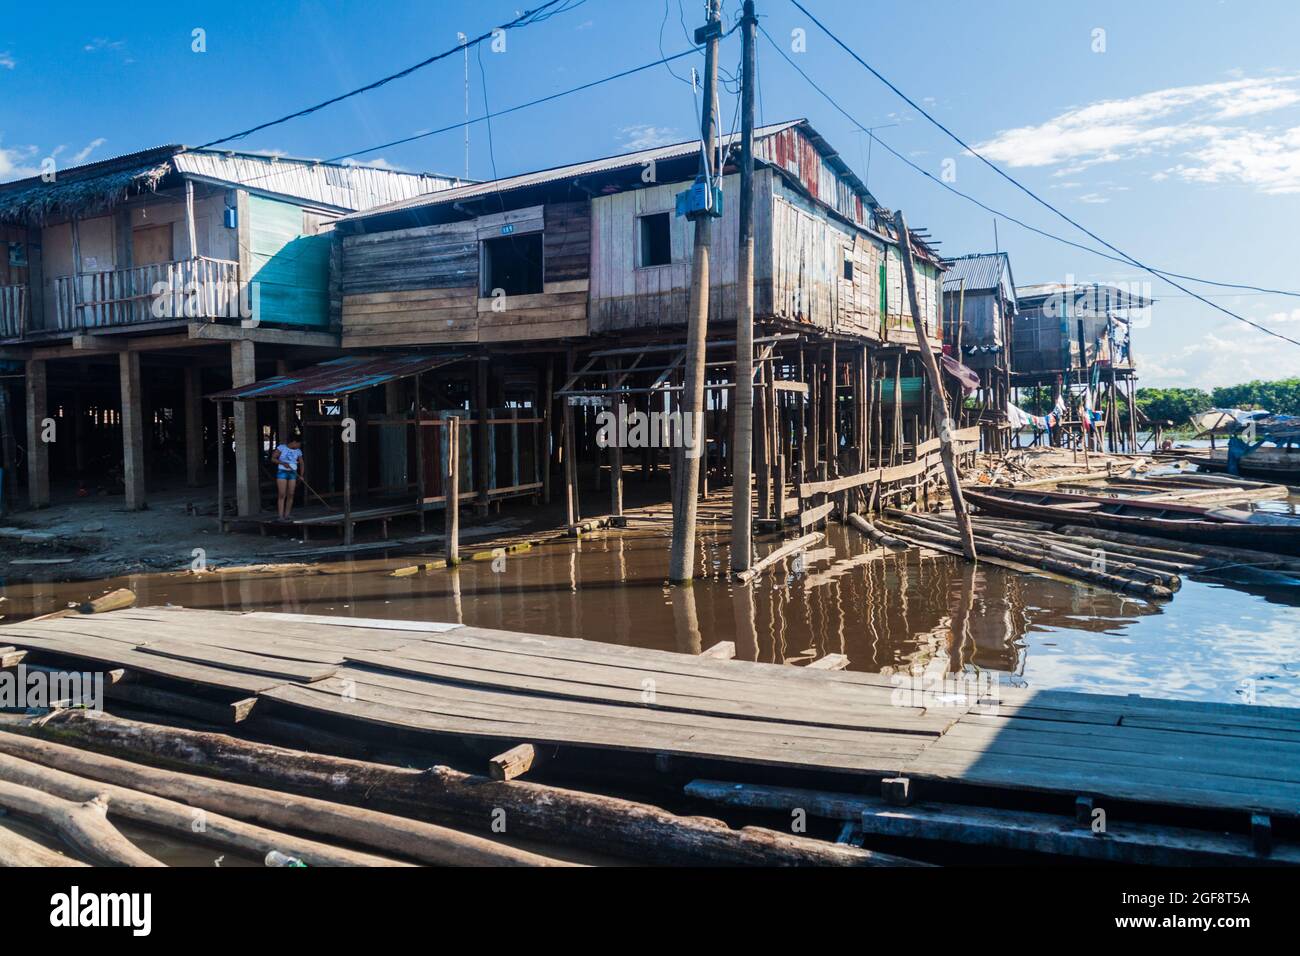 IQUITOS, PERU - JULY 19, 2015: Surroundings of Bellavista Nanay port in Iquitos, Peru Stock Photo